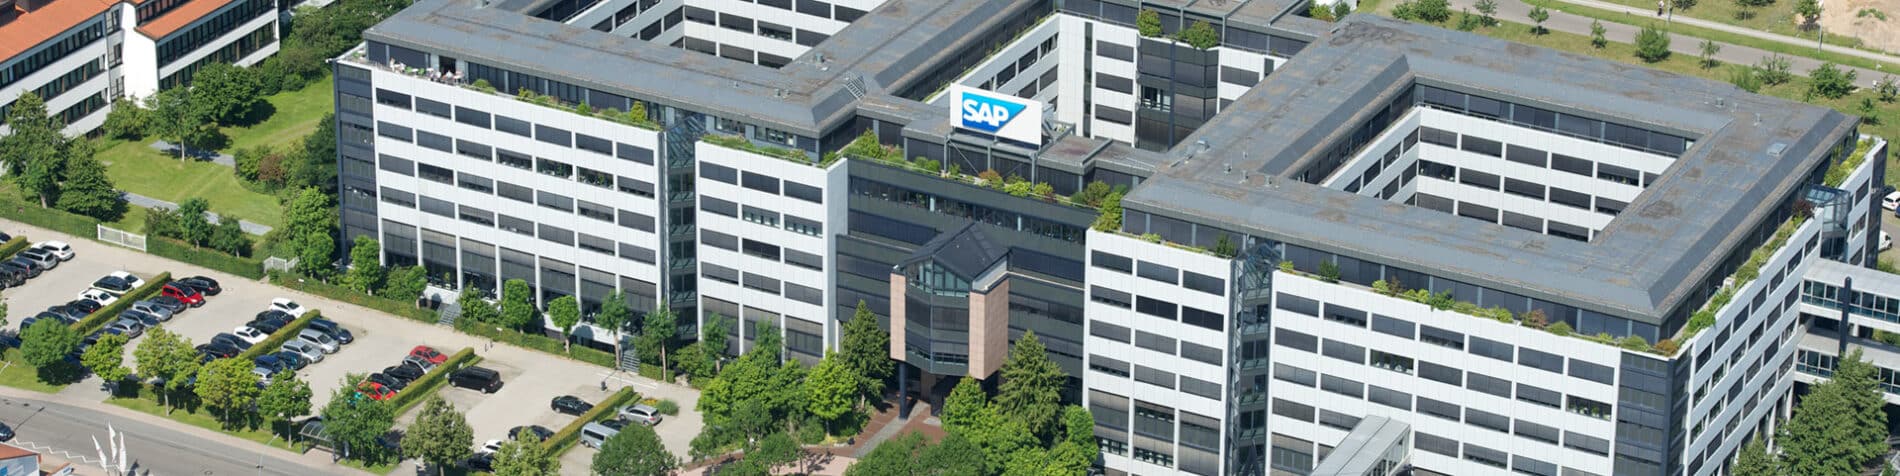 SAP SE Extends CFO Luka Mucic’s Contract